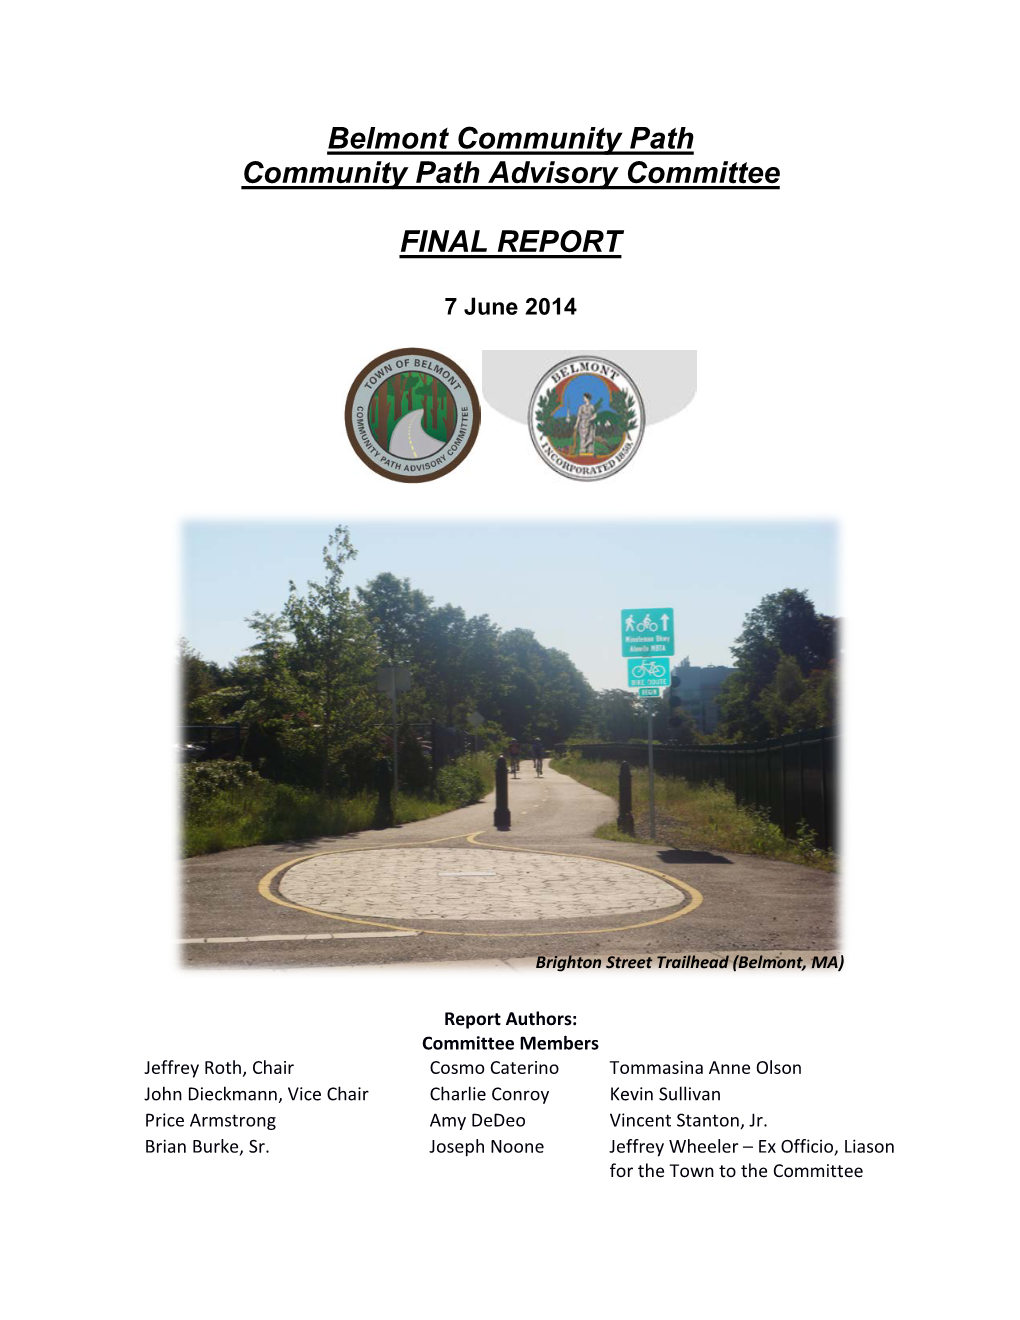 Belmont Community Path Advisory Committee Final Report (7 June 2014)